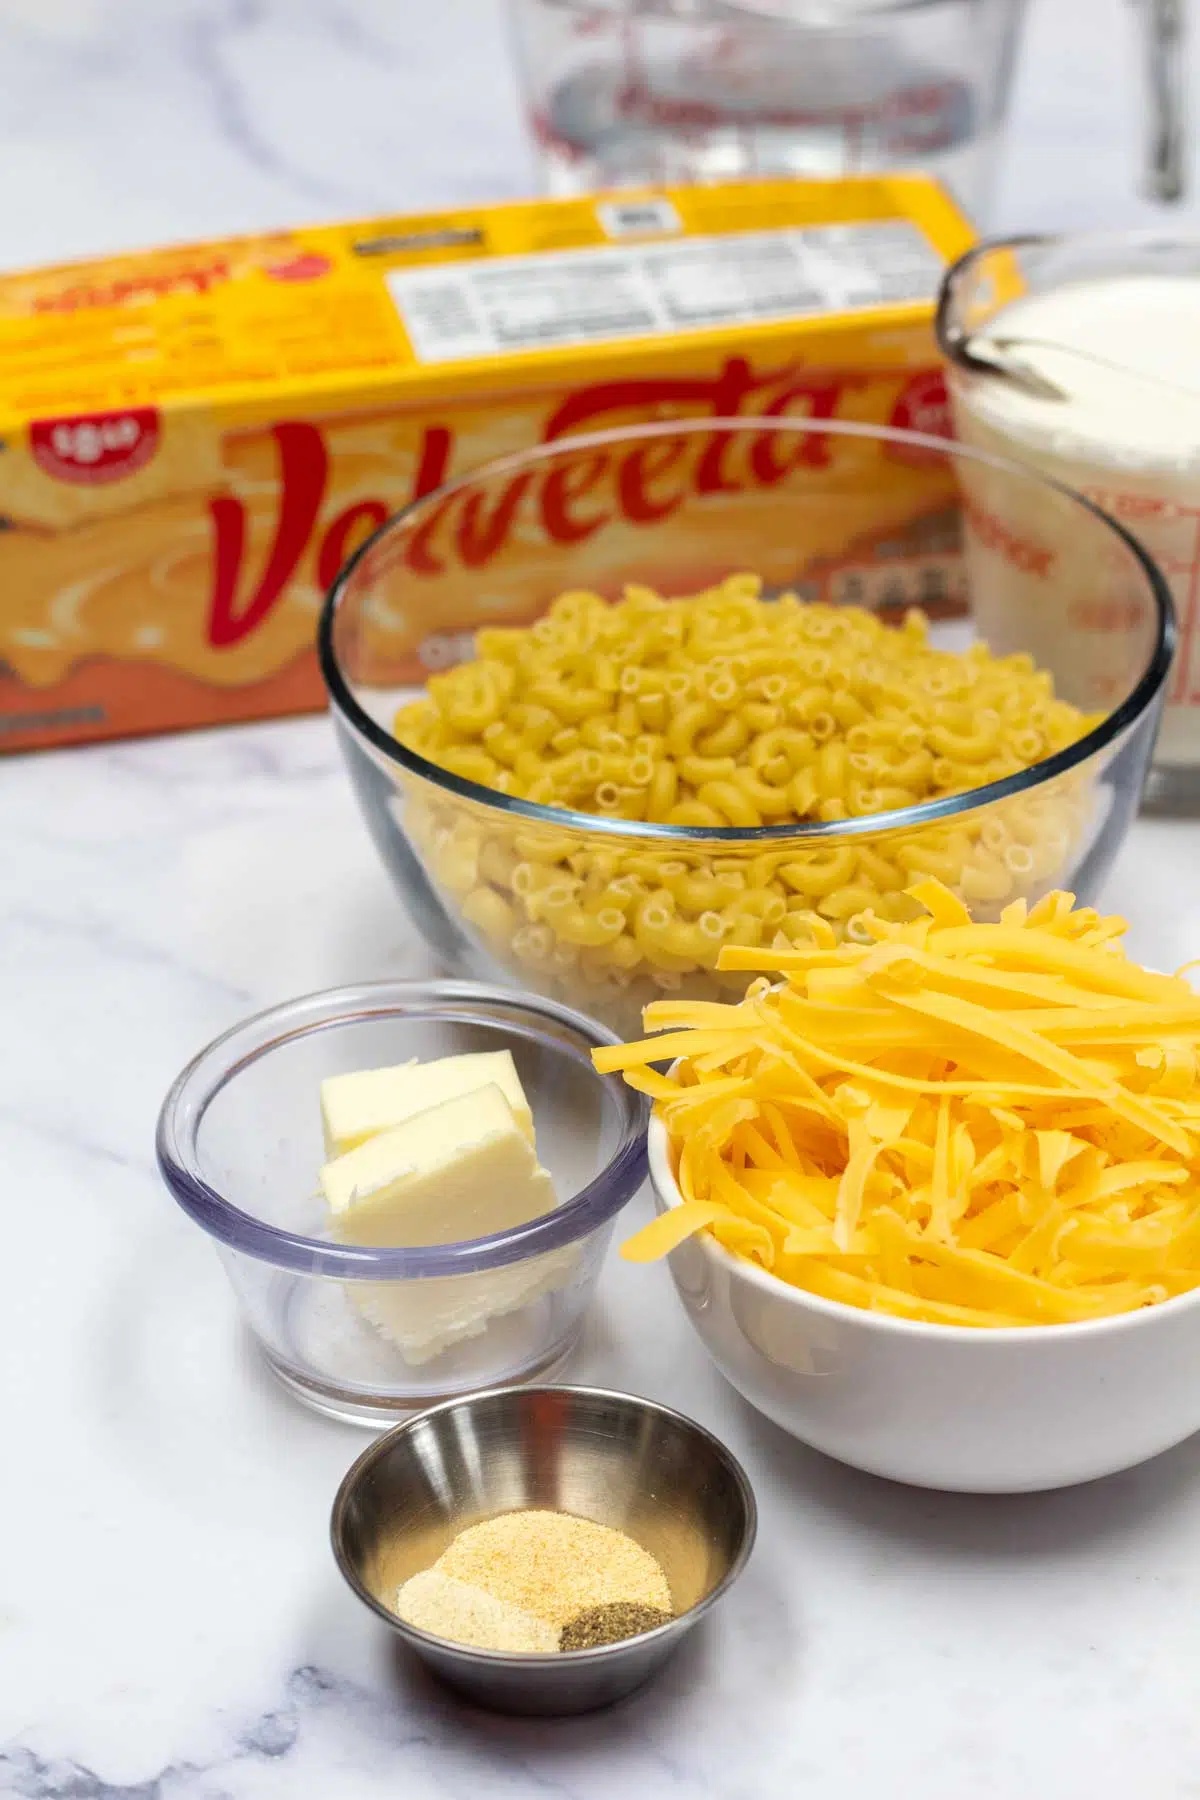 Tall image showing ingredients for Velveeta mac & cheese.